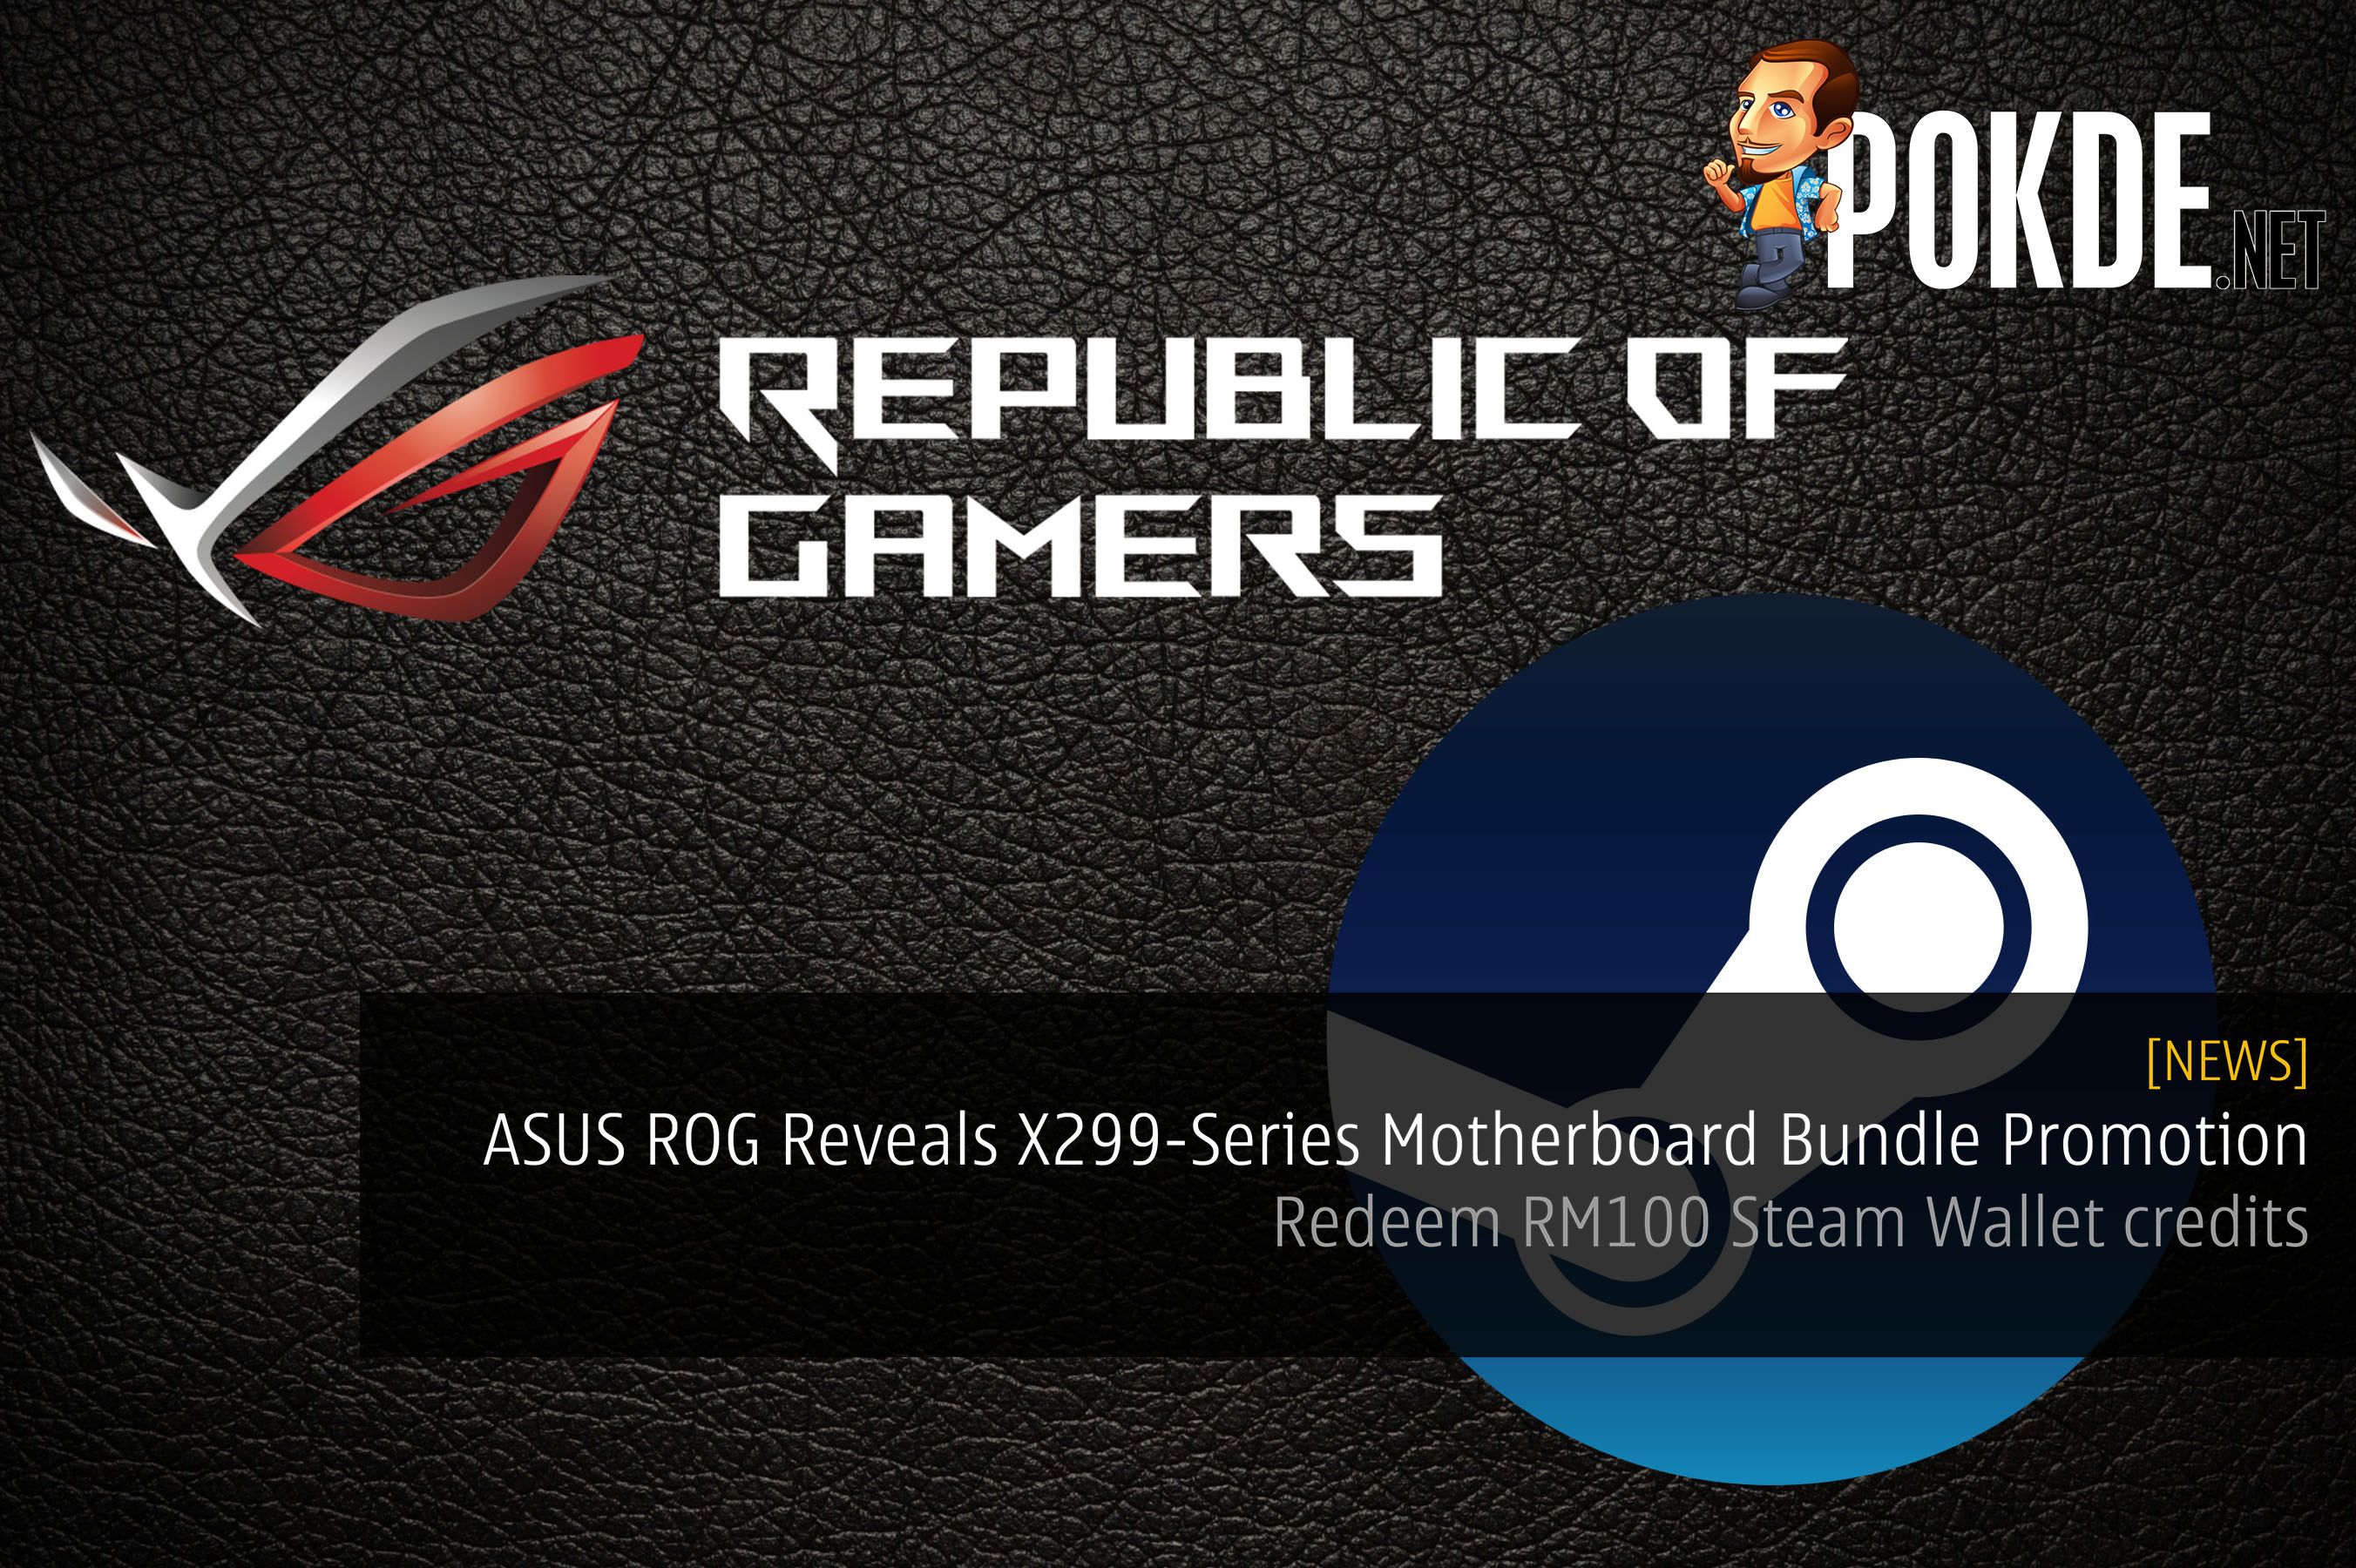 ASUS ROG Reveals X299 Motherboard Series Bundle Promotion - Redeem RM100 Steam Wallet credits 23